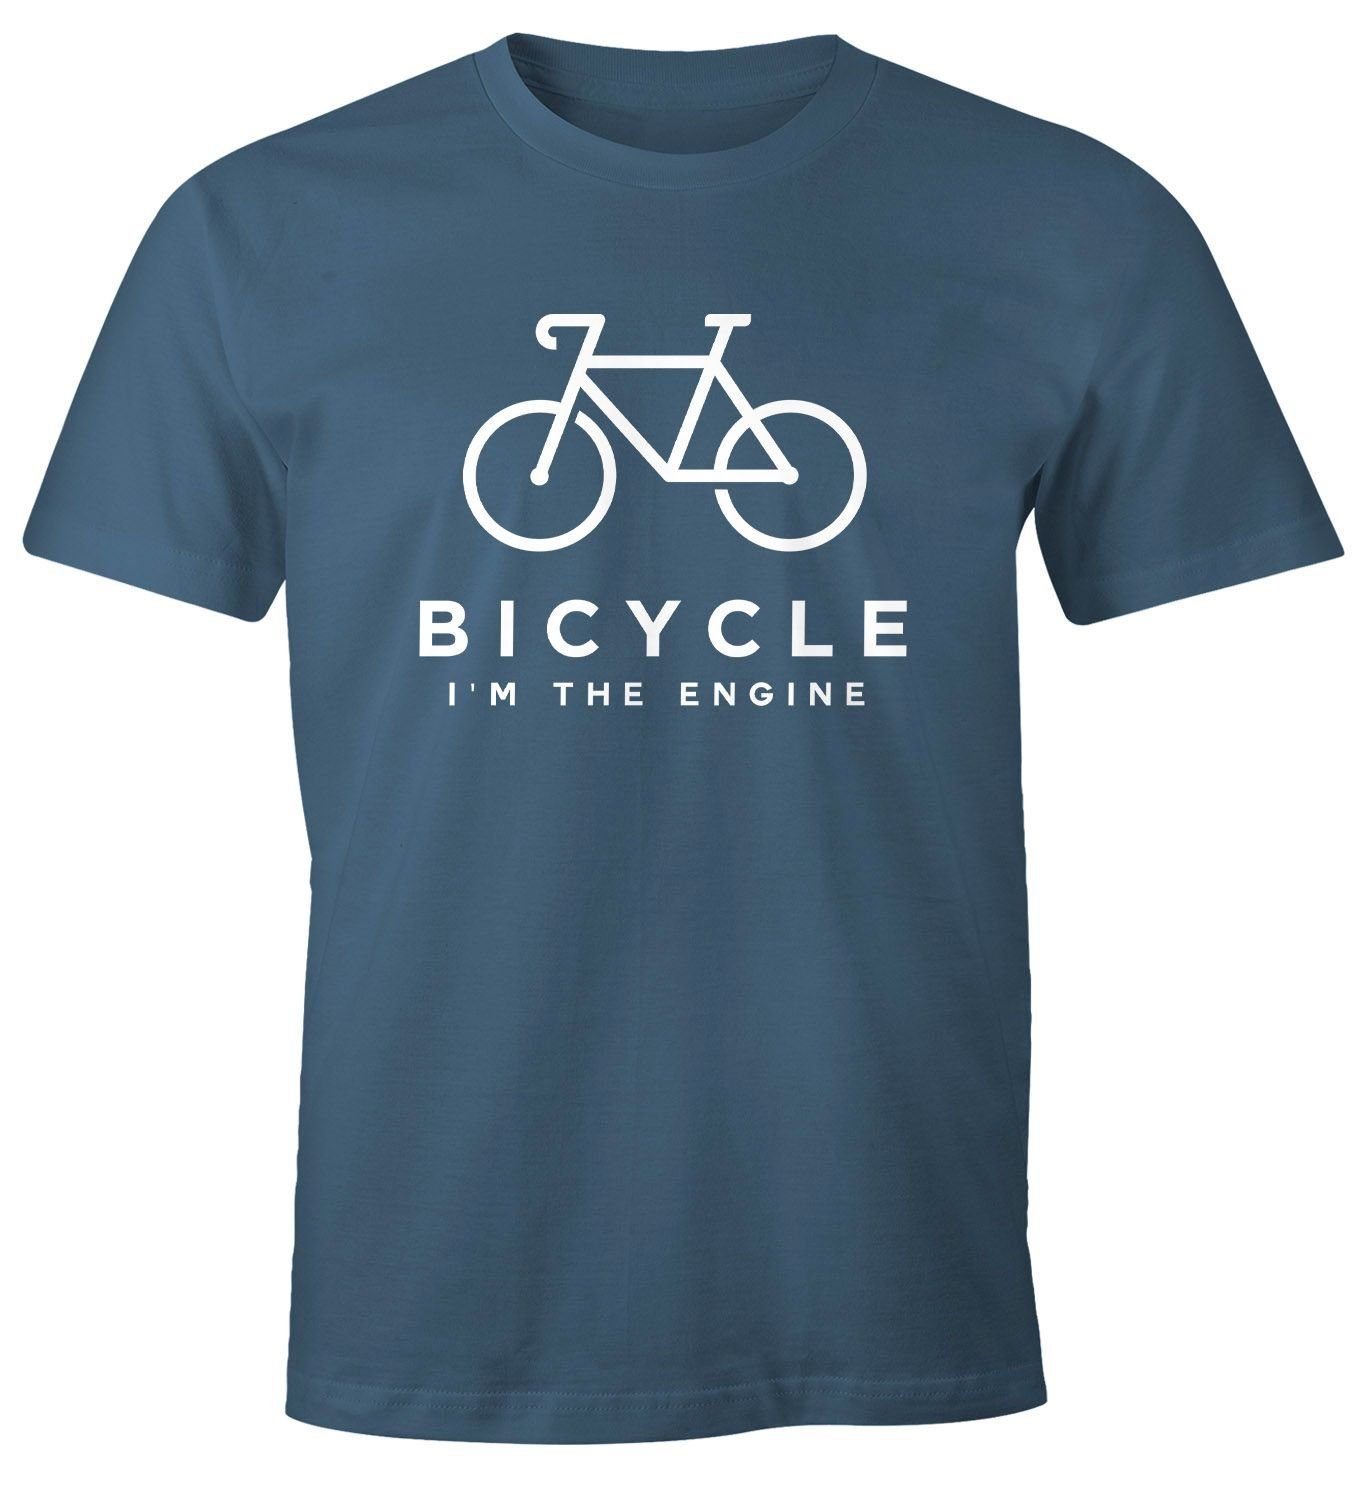 MoonWorks Print-Shirt Herren T-Shirt Fahrrad Sprüche Bicycle I'm the Engine Bike Rad Fun-Shirt Spruch lustig Moonworks® mit Print blau